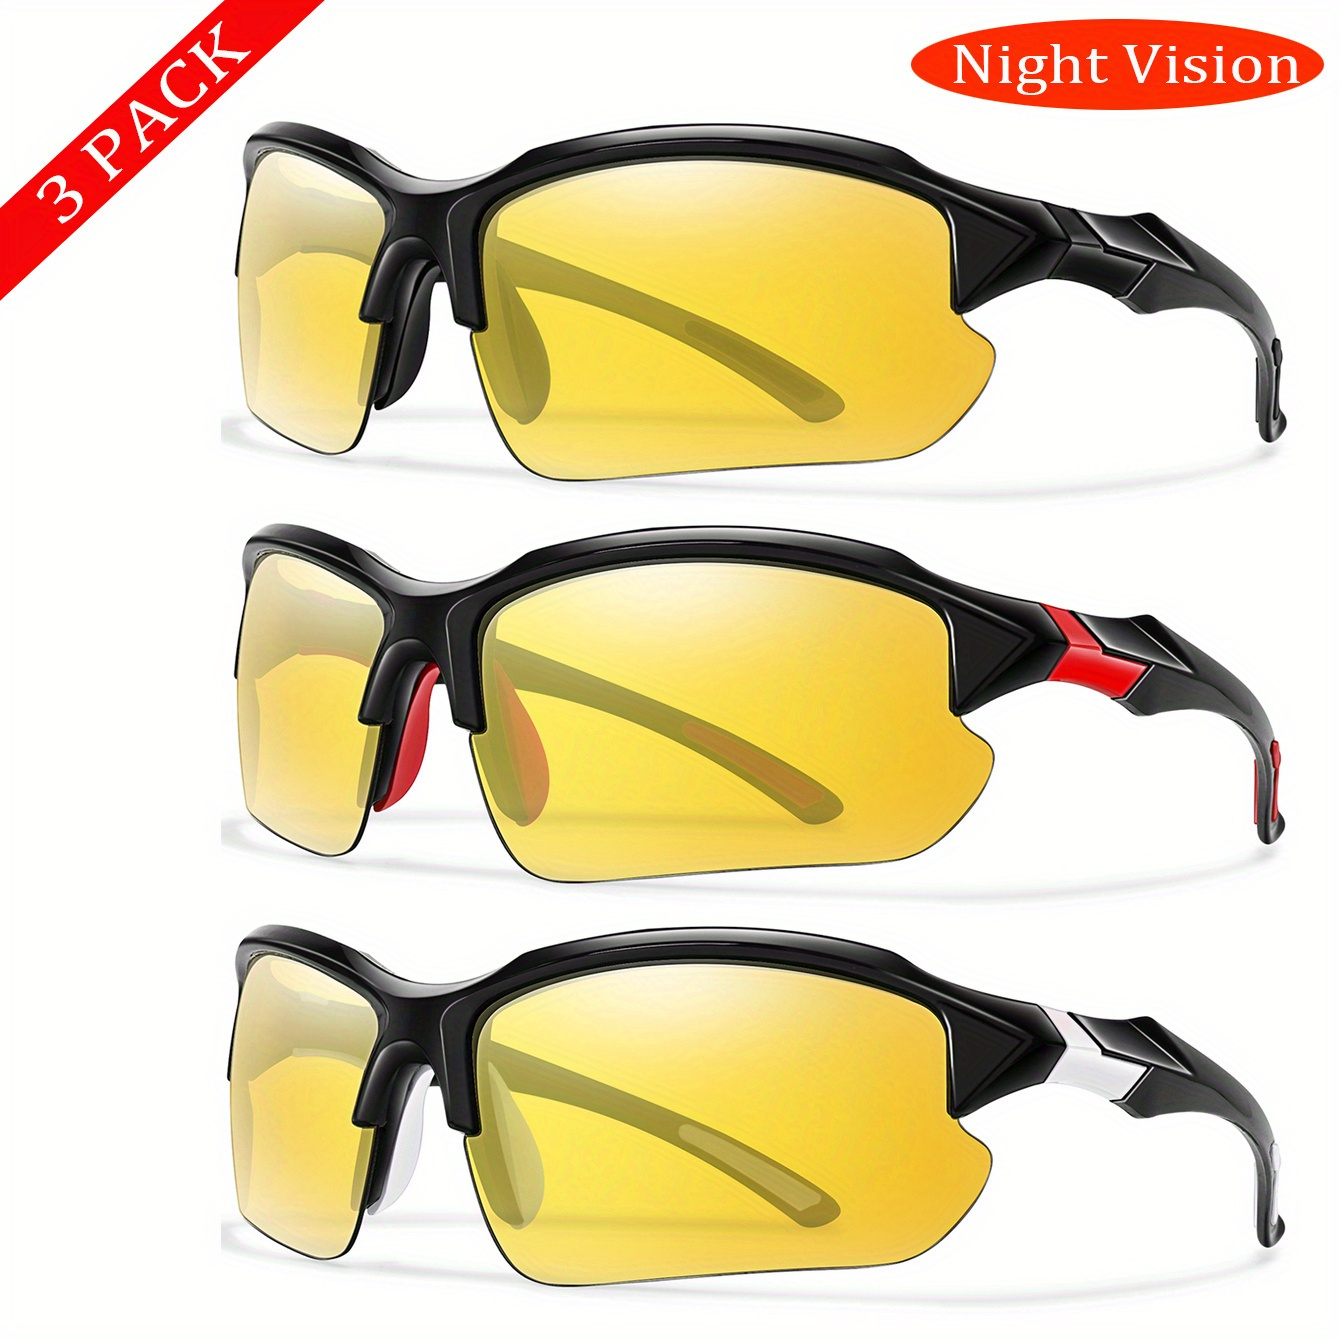 3 Pcs Night Vision Women Fashion Outdoor Sports Running Glasses Climbing Hiking Golf Windproof Eyewear No Polarized,Googles Sun Glasses,Goggles Y